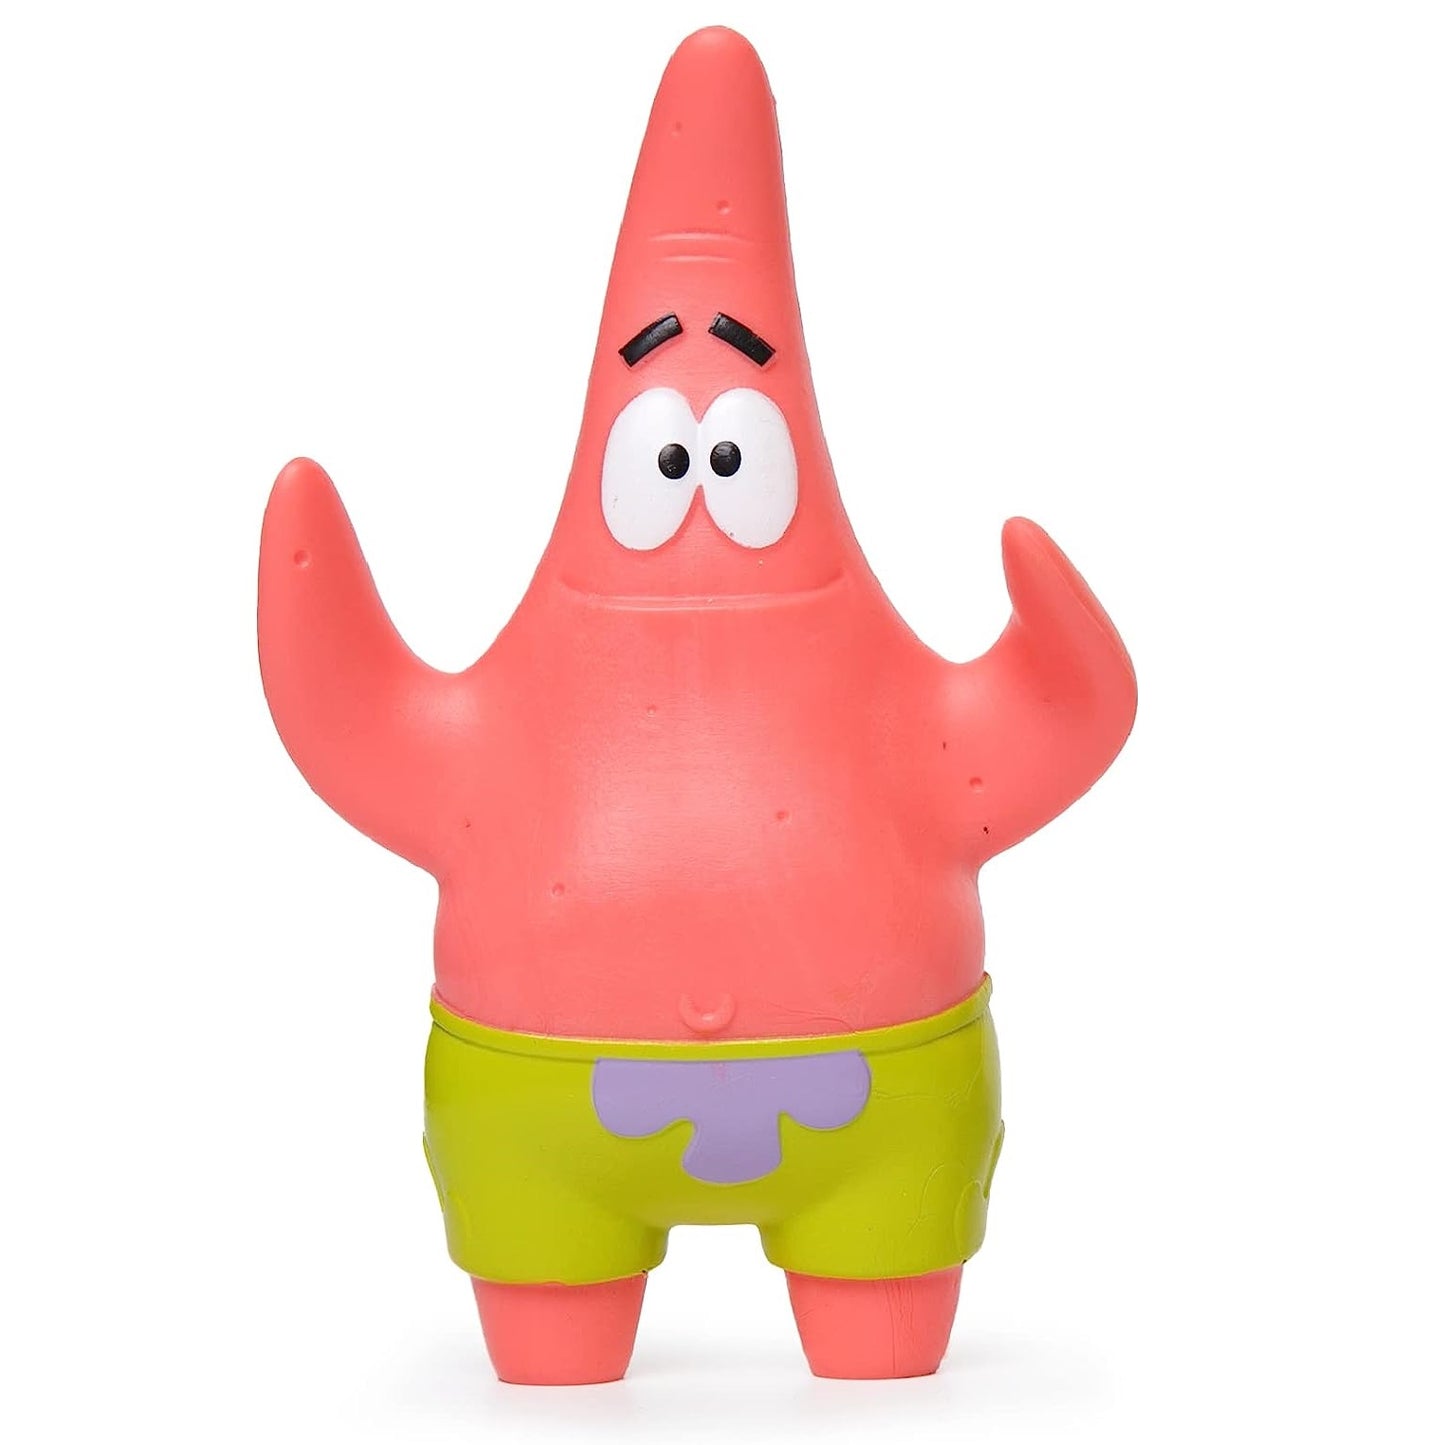 Patrick Star from Spongebob Squarepants bendable figure